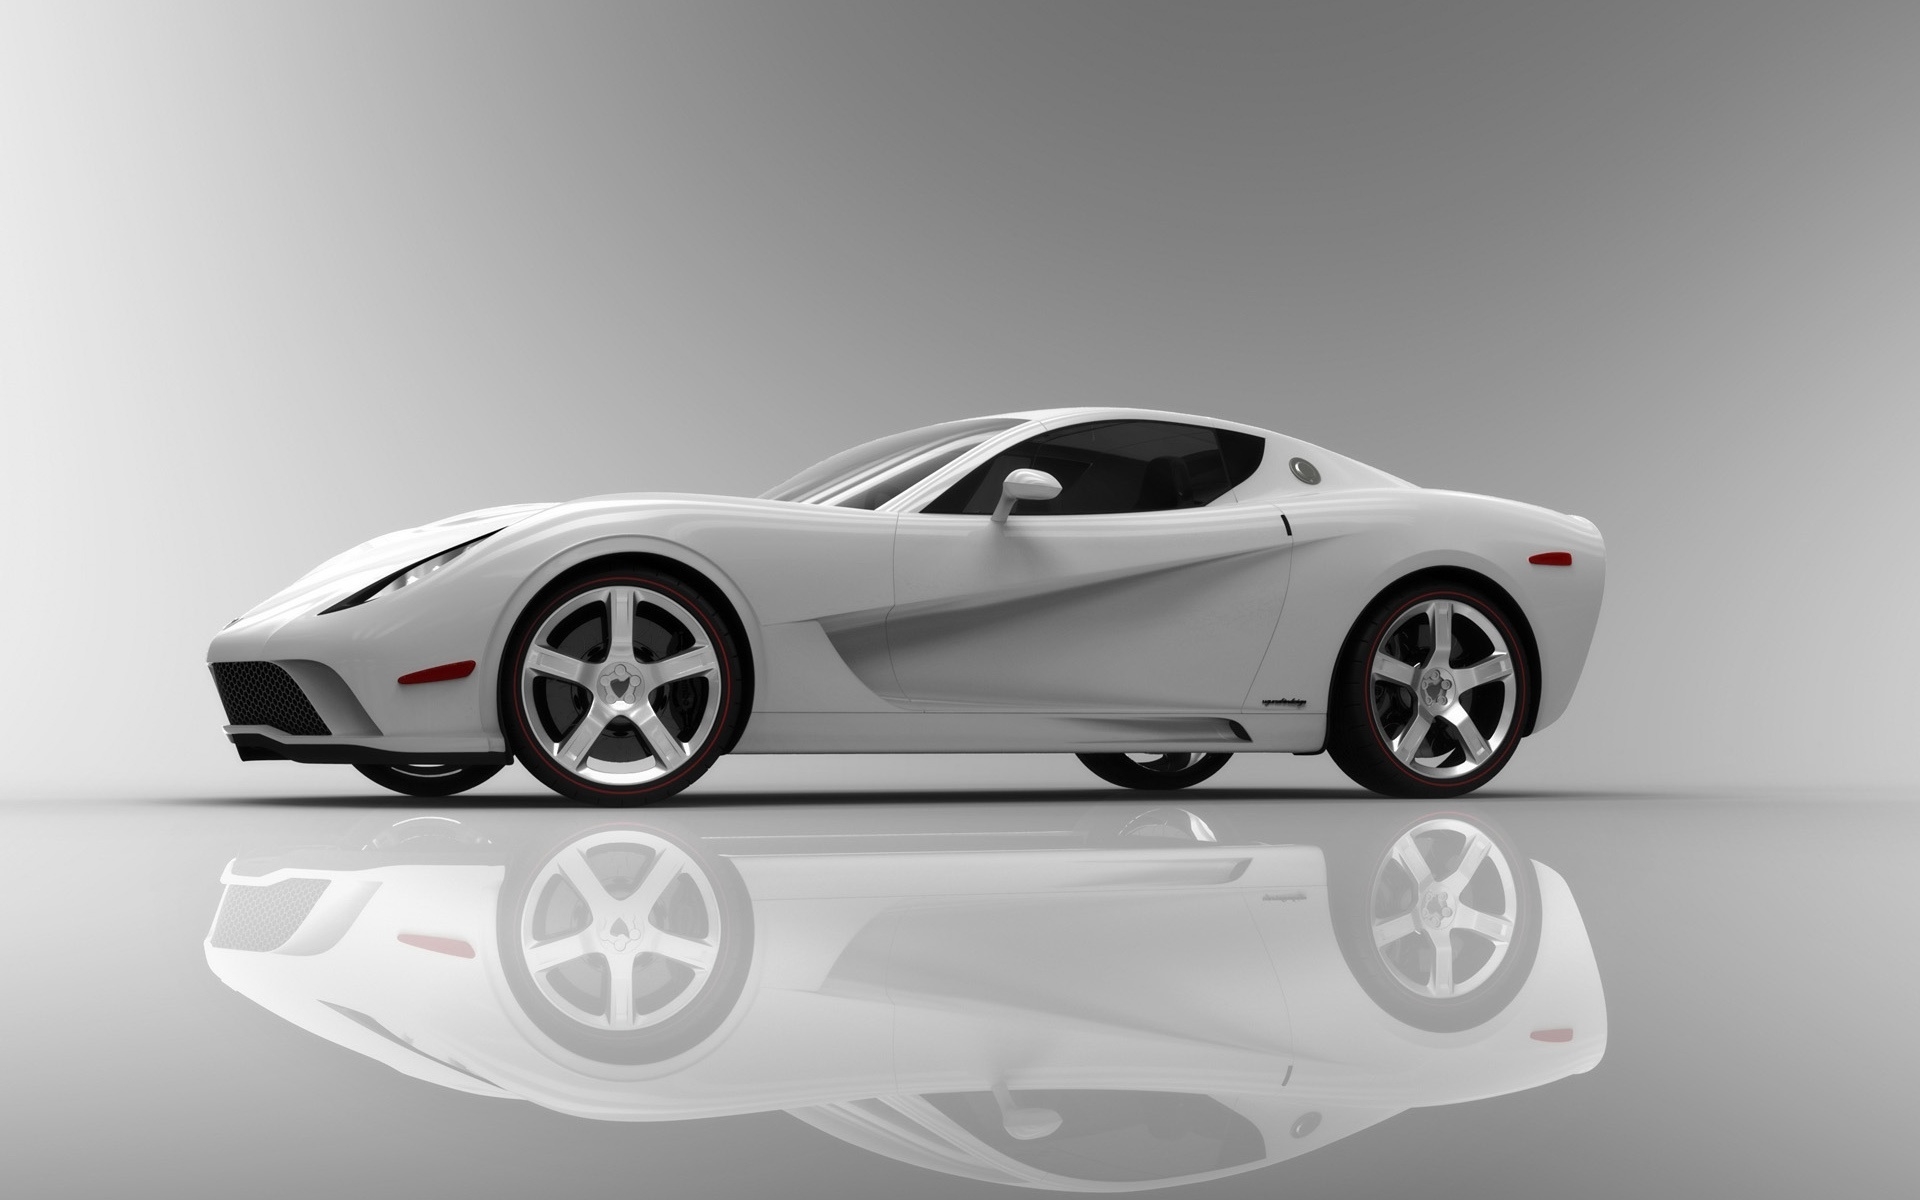 Mallett Corvette Z03 2009 White Front Angle for 1920 x 1200 widescreen resolution